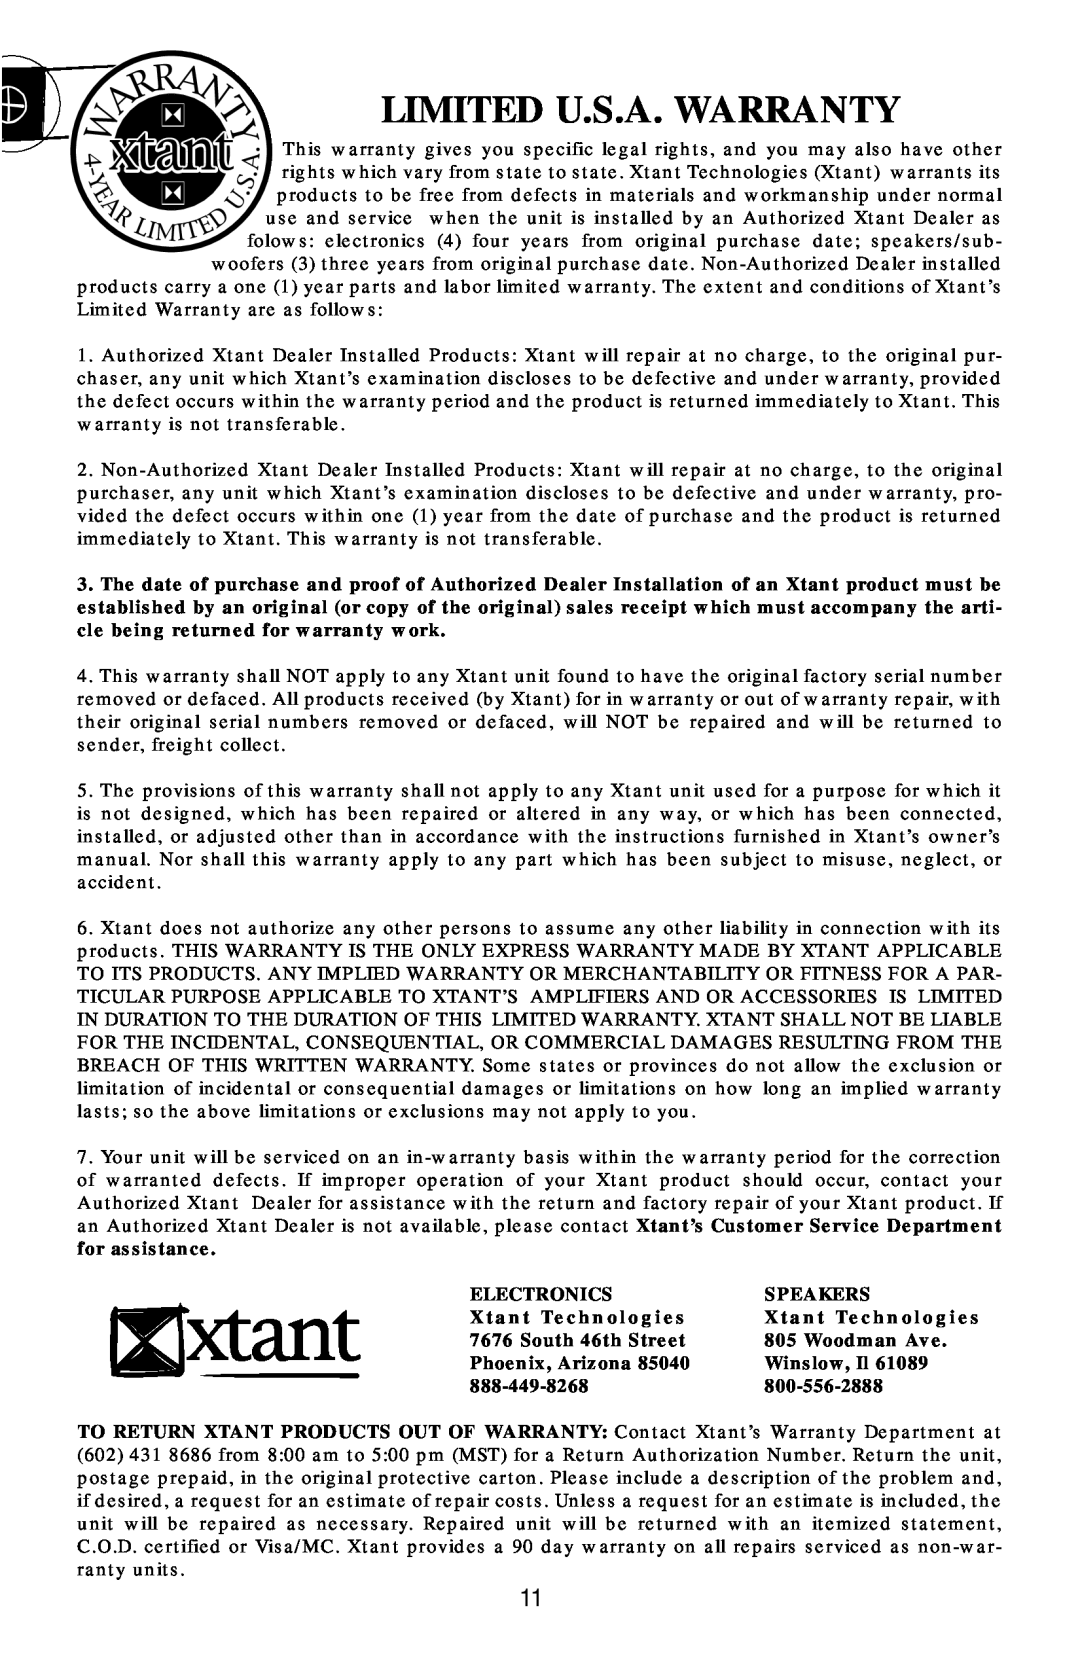 Xtant 2200ix manual Limited U.S.A. Warranty 